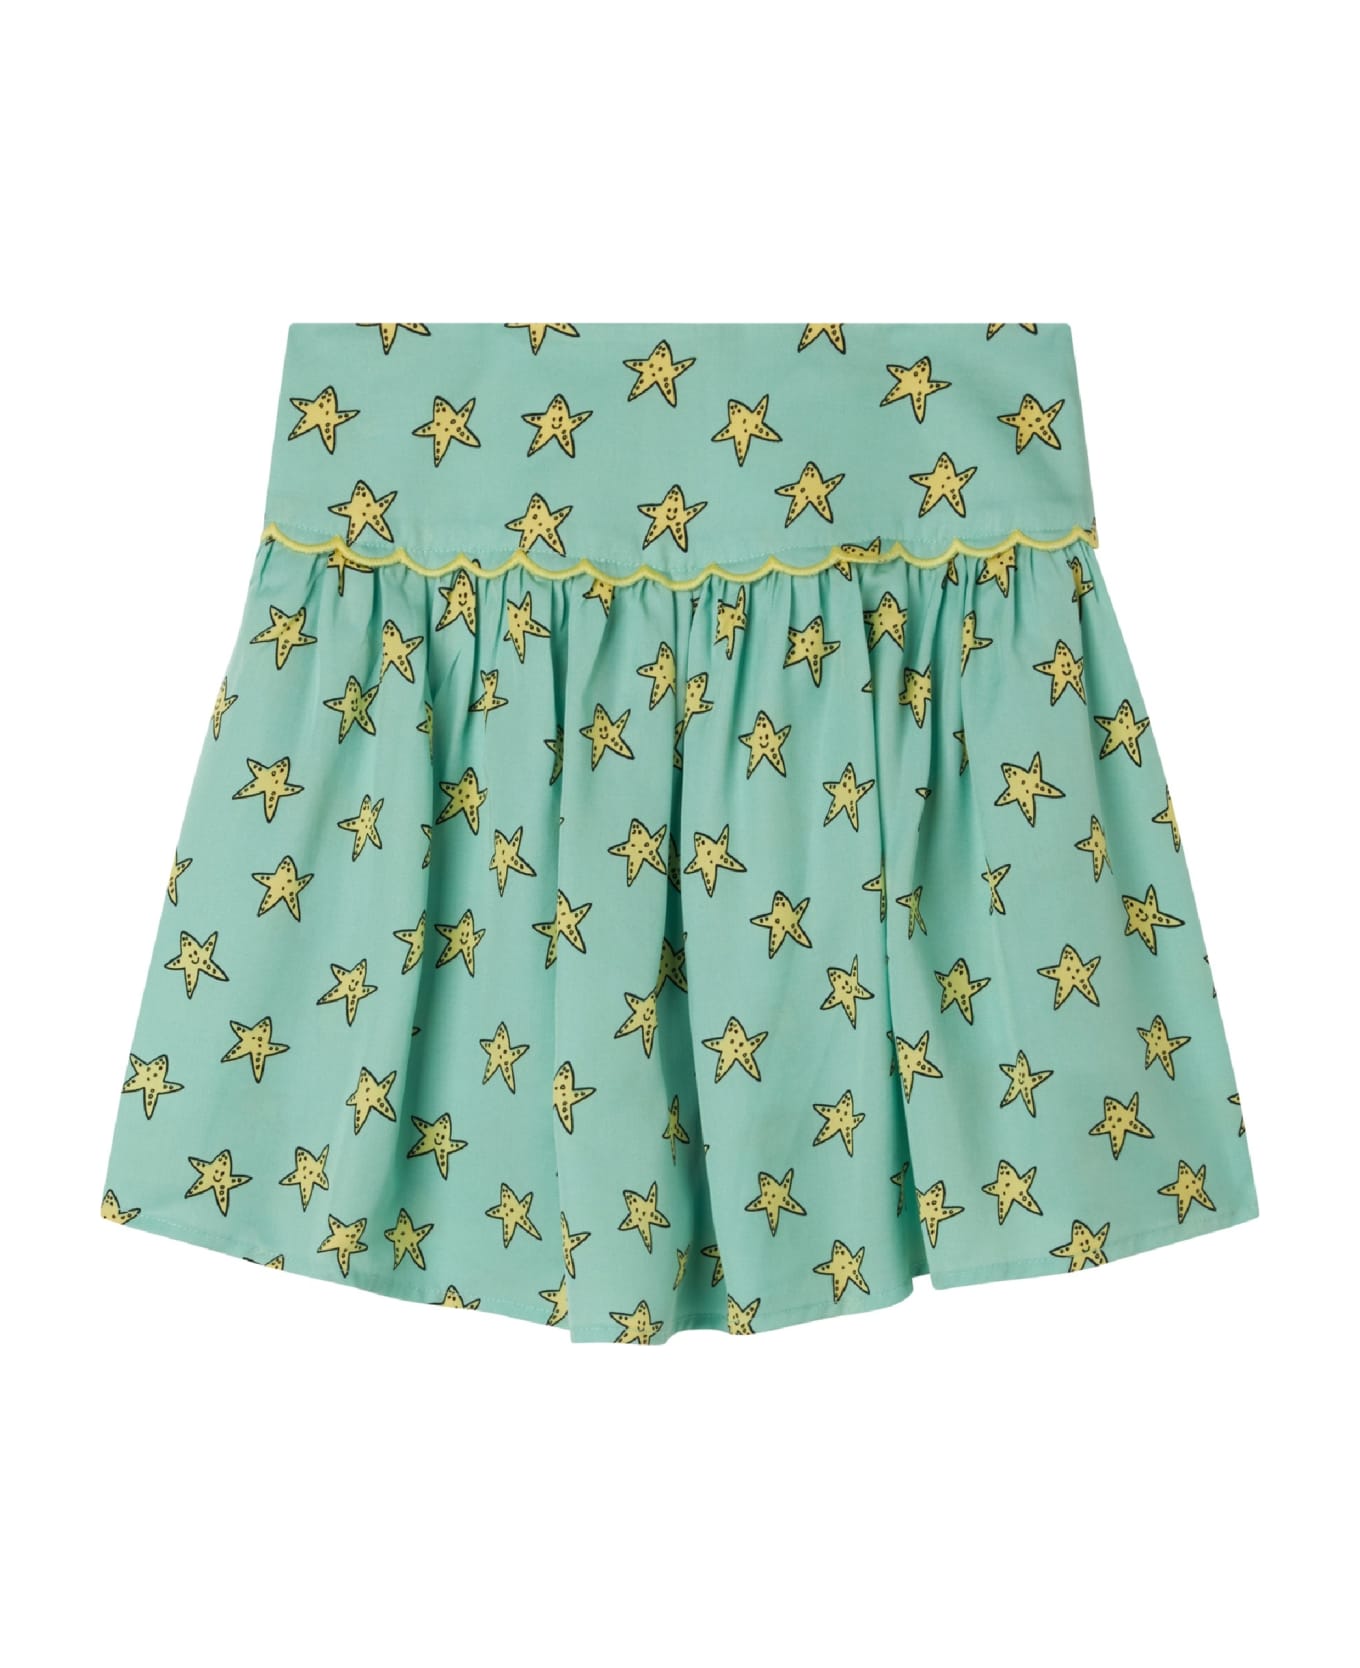 Stella McCartney Kids Printed Skirt - Green